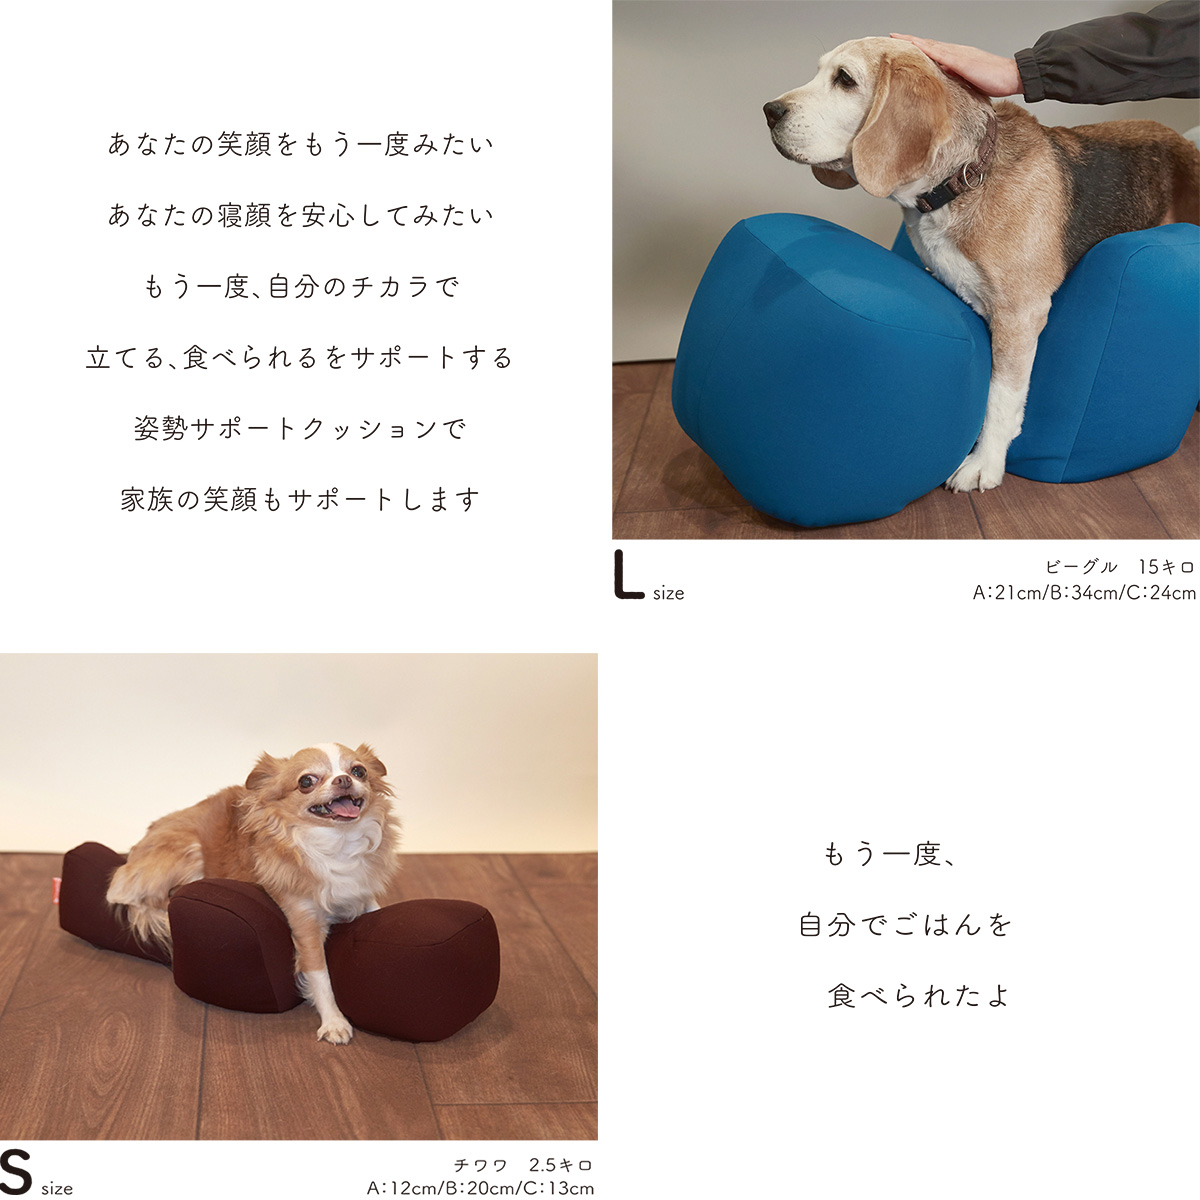 OneAid リラクッション ペット S ブラウン 犬用 猫用 介護 介護用品 